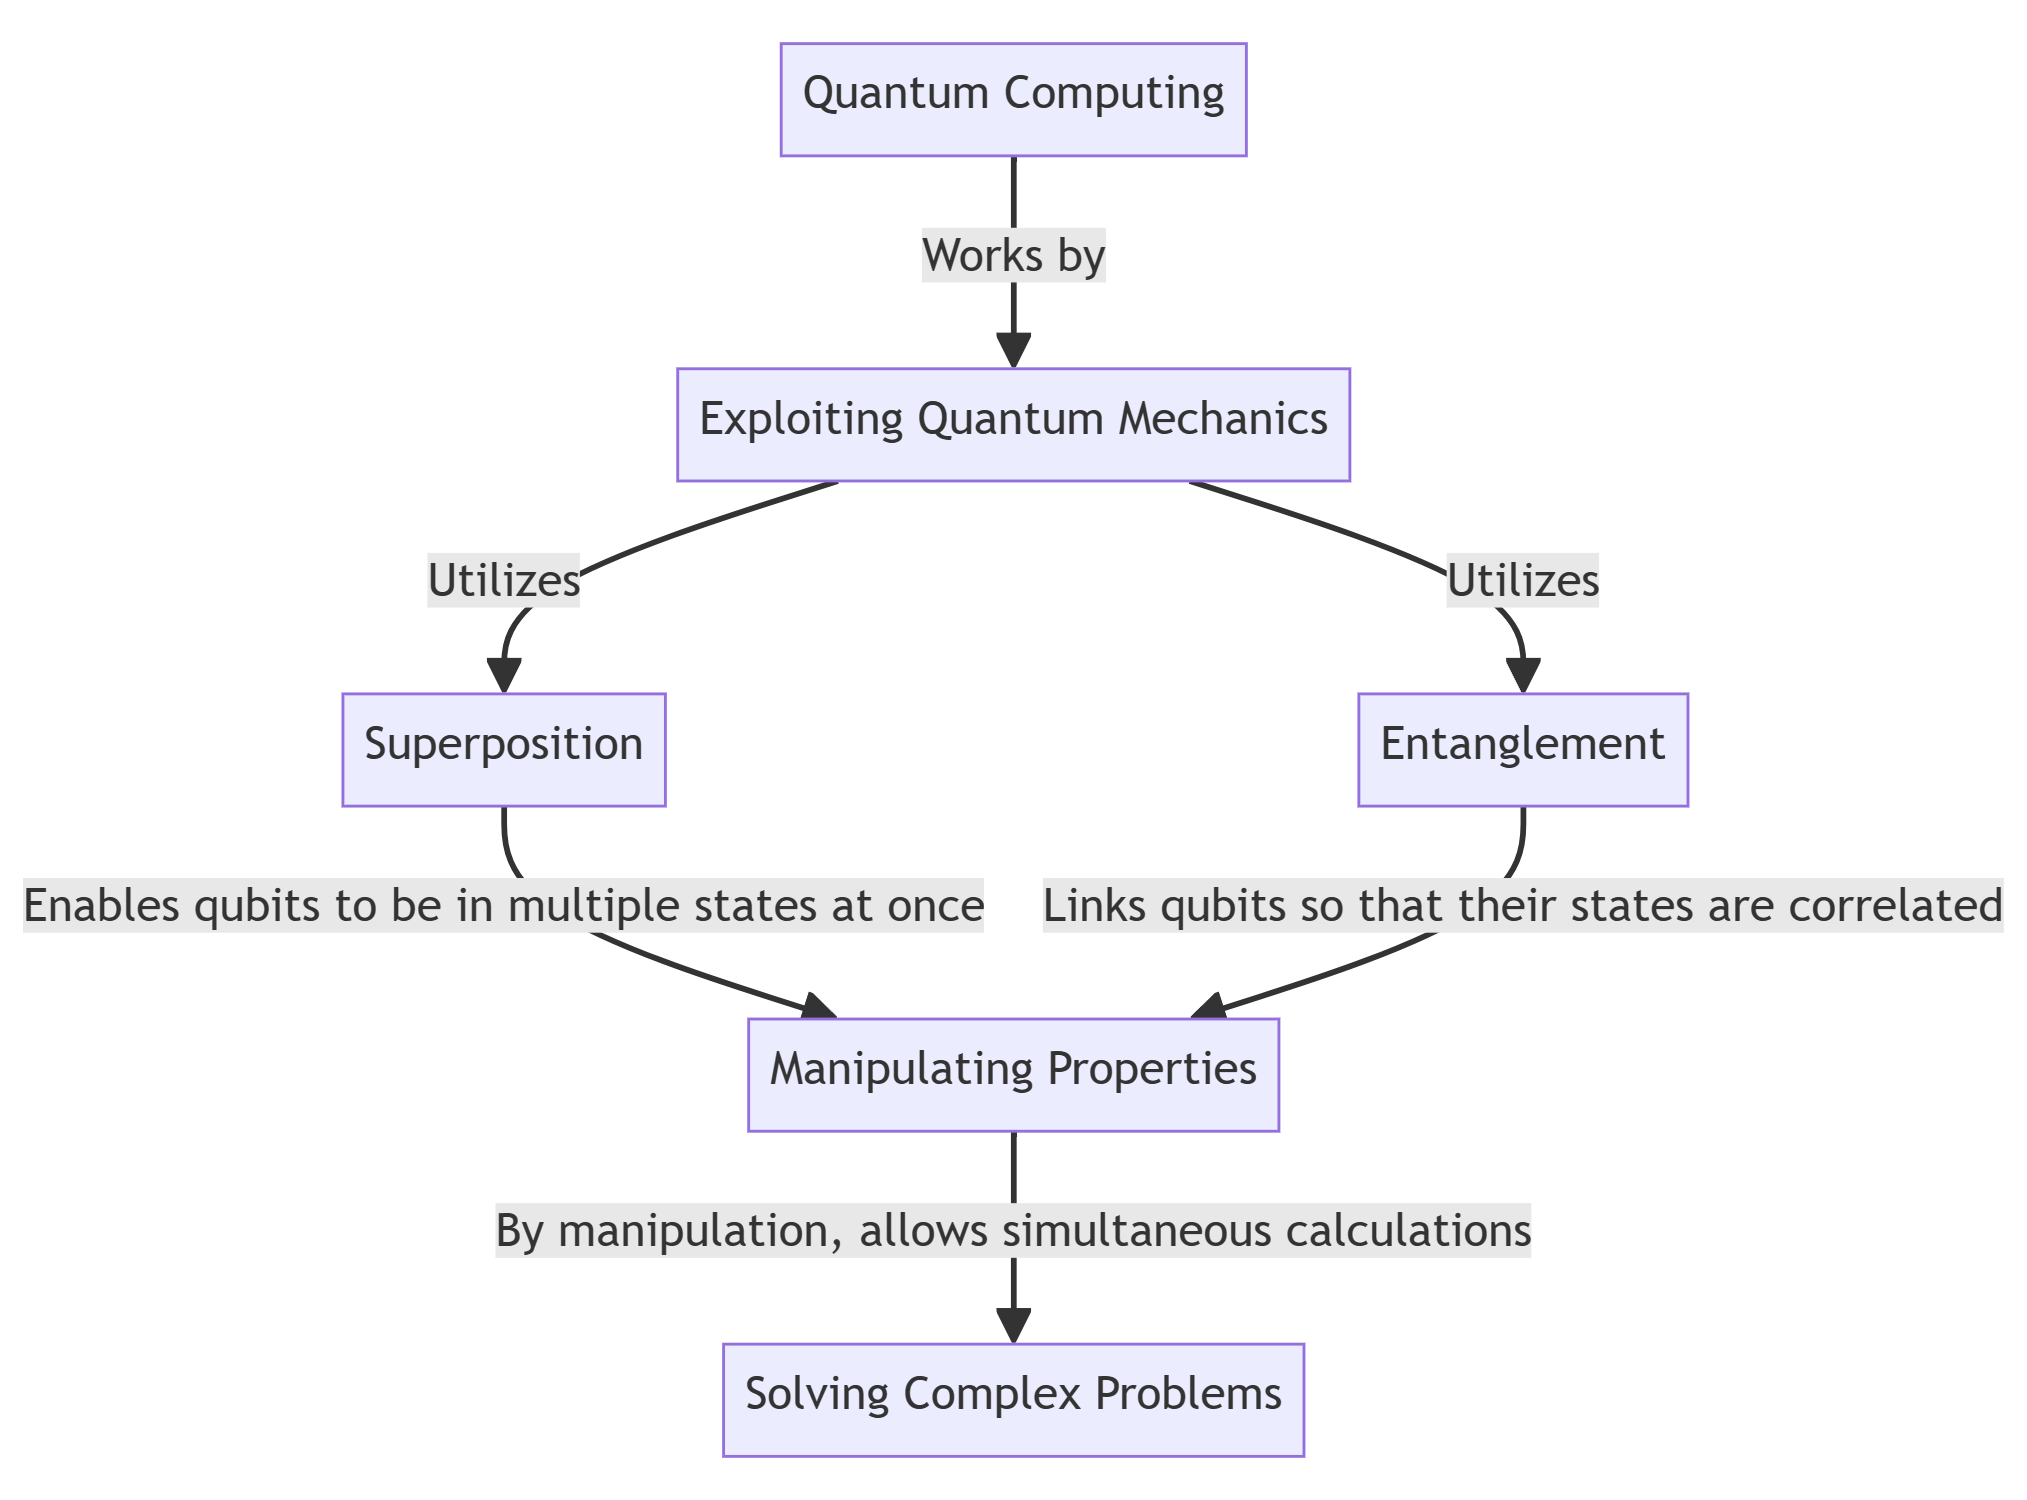 How Does Quantum Computing Work?